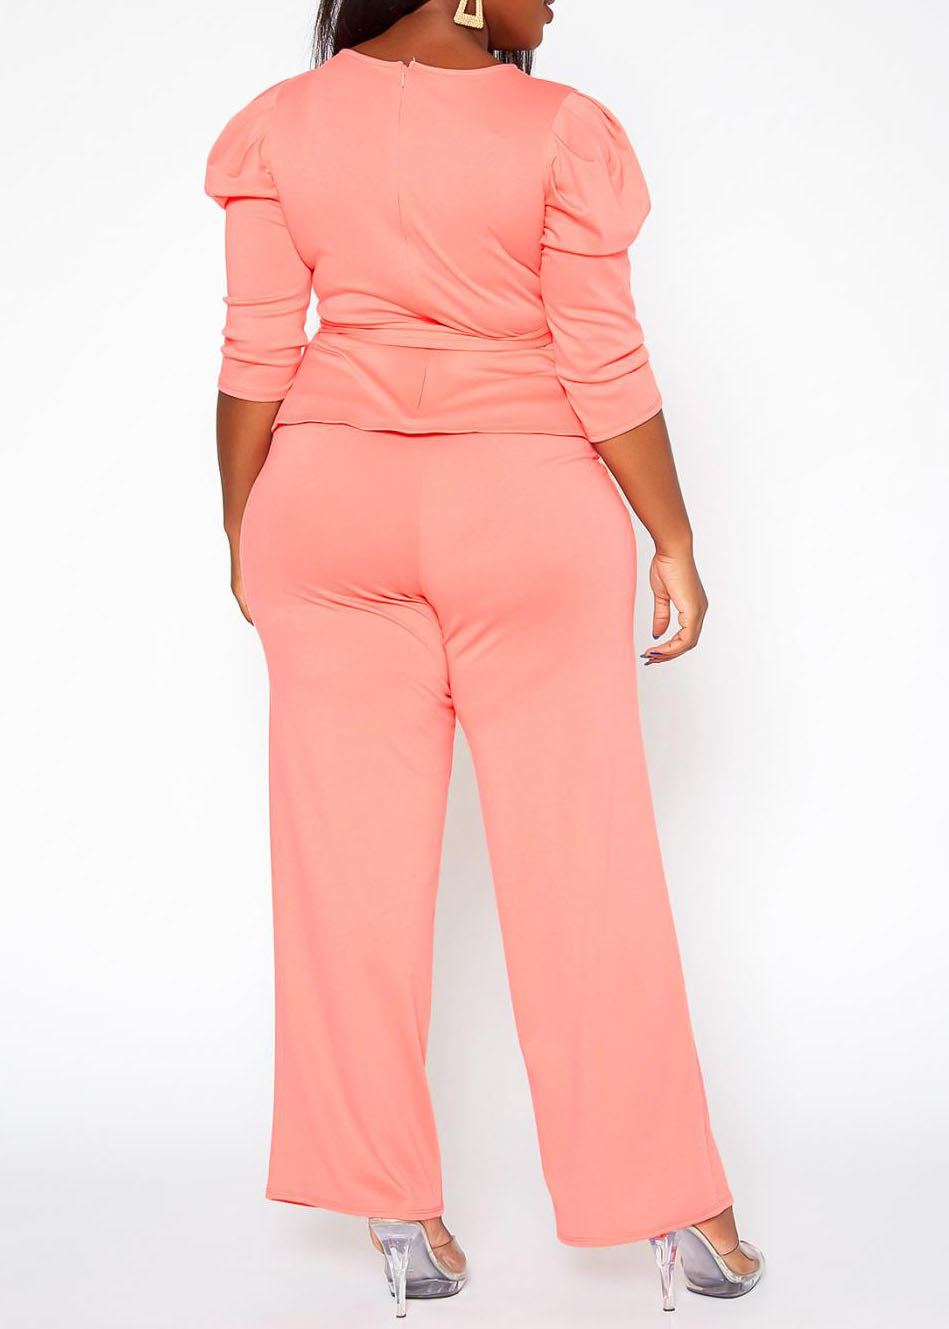 HI Curvy Plus Size Women Solid Peplum Top & Straight Pants Set Made in USA